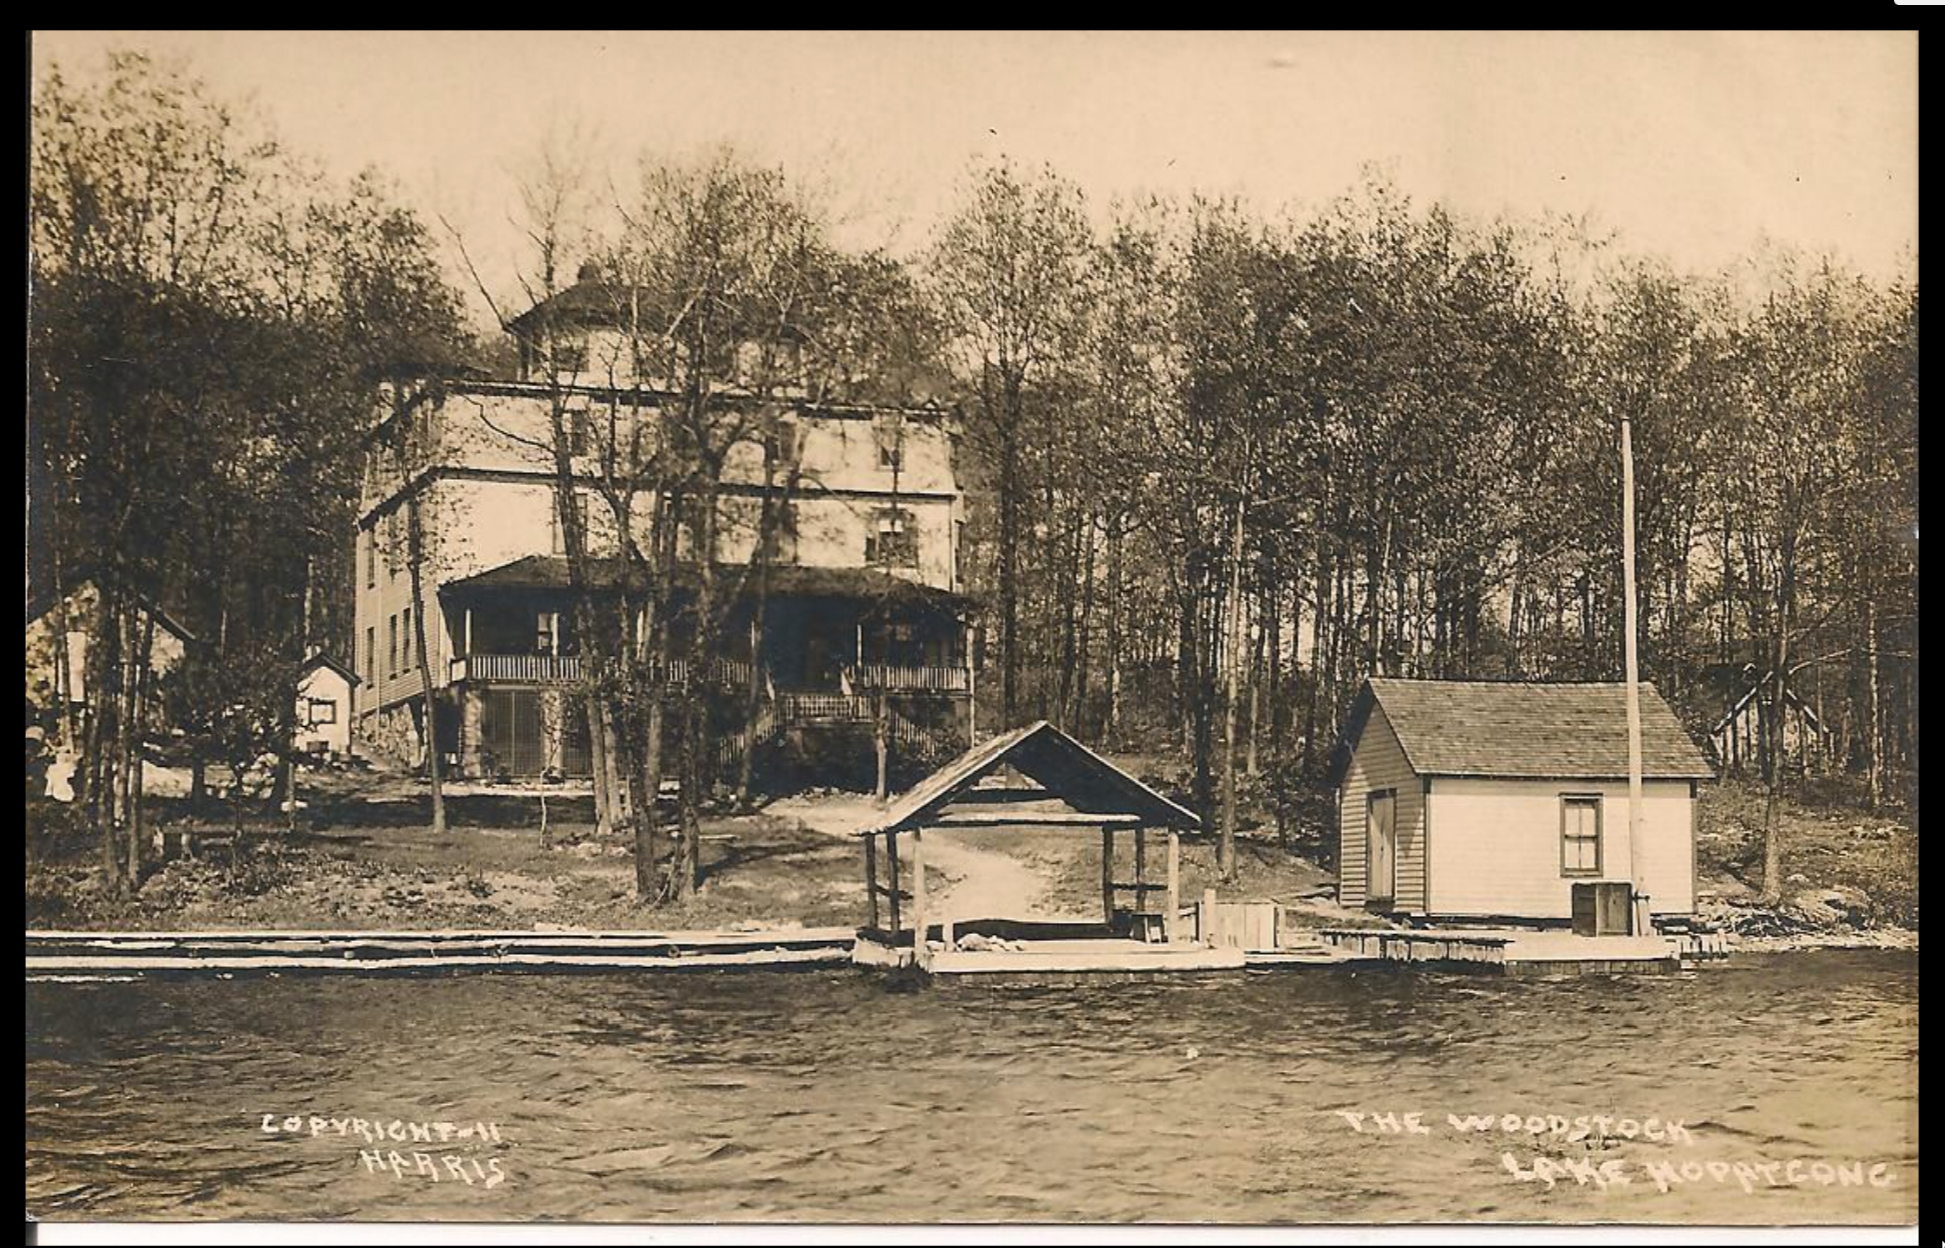 Lake Hoppatcong - The Woodstock - c 1910